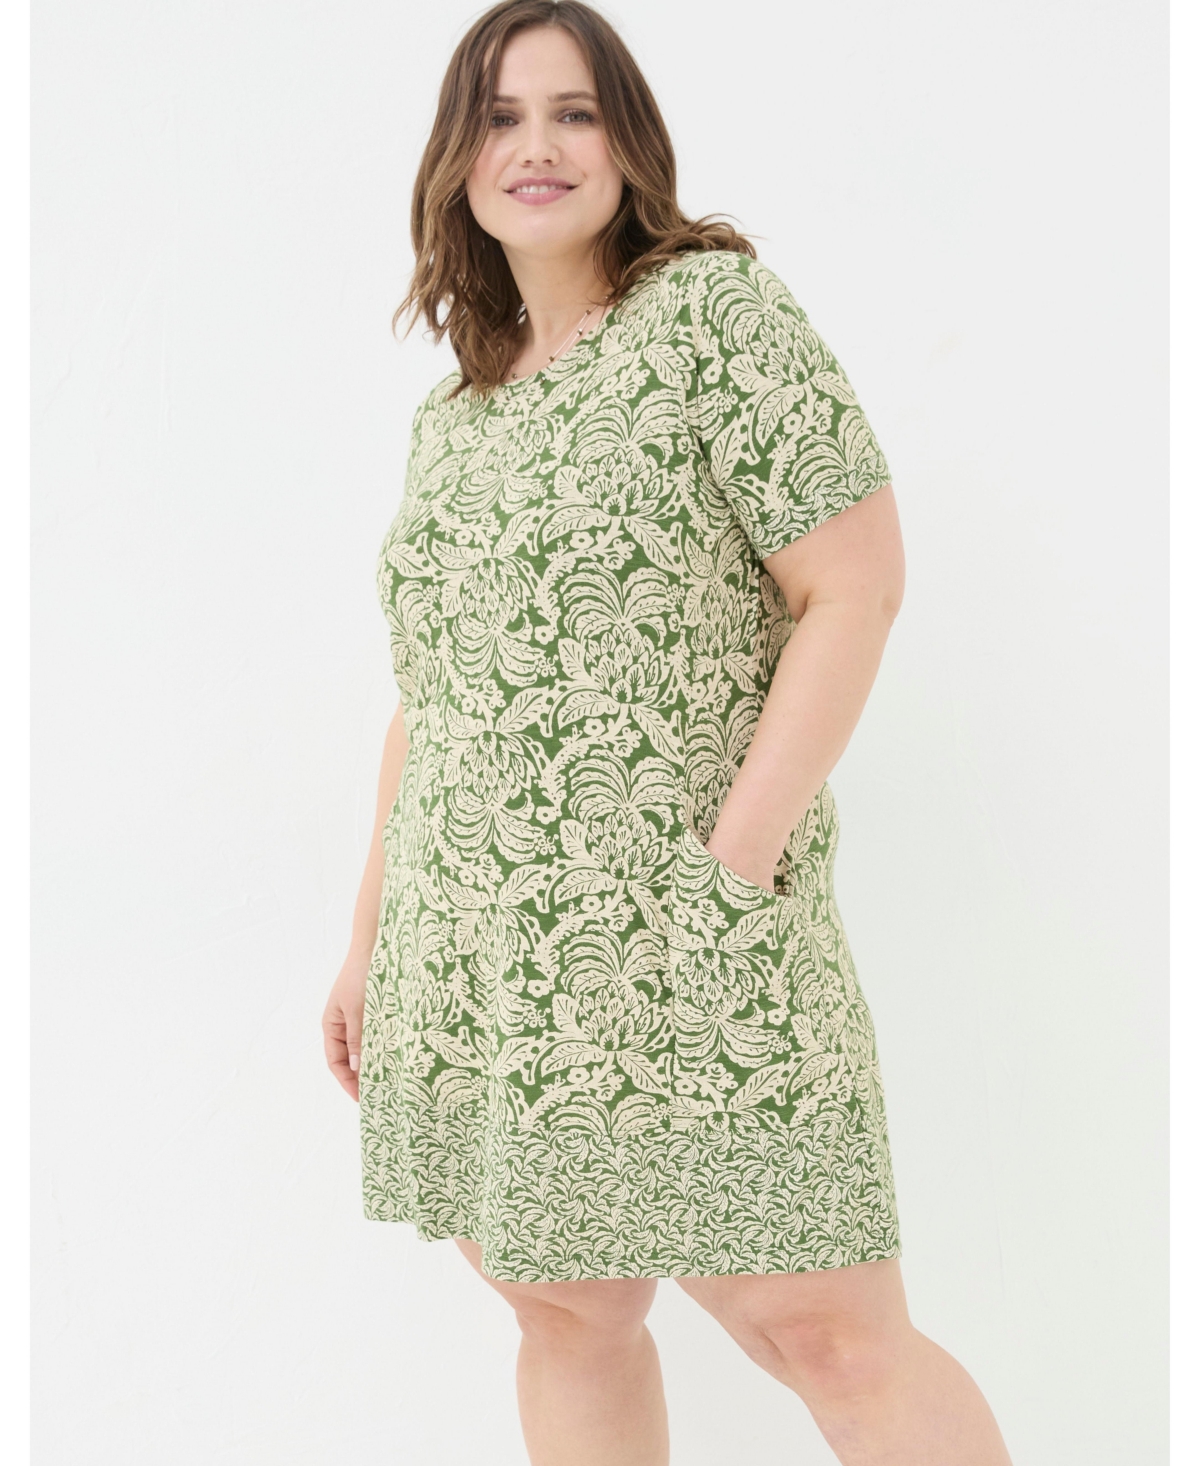 Plus Size Simone Damask Floral Jersey Dress - Dark green